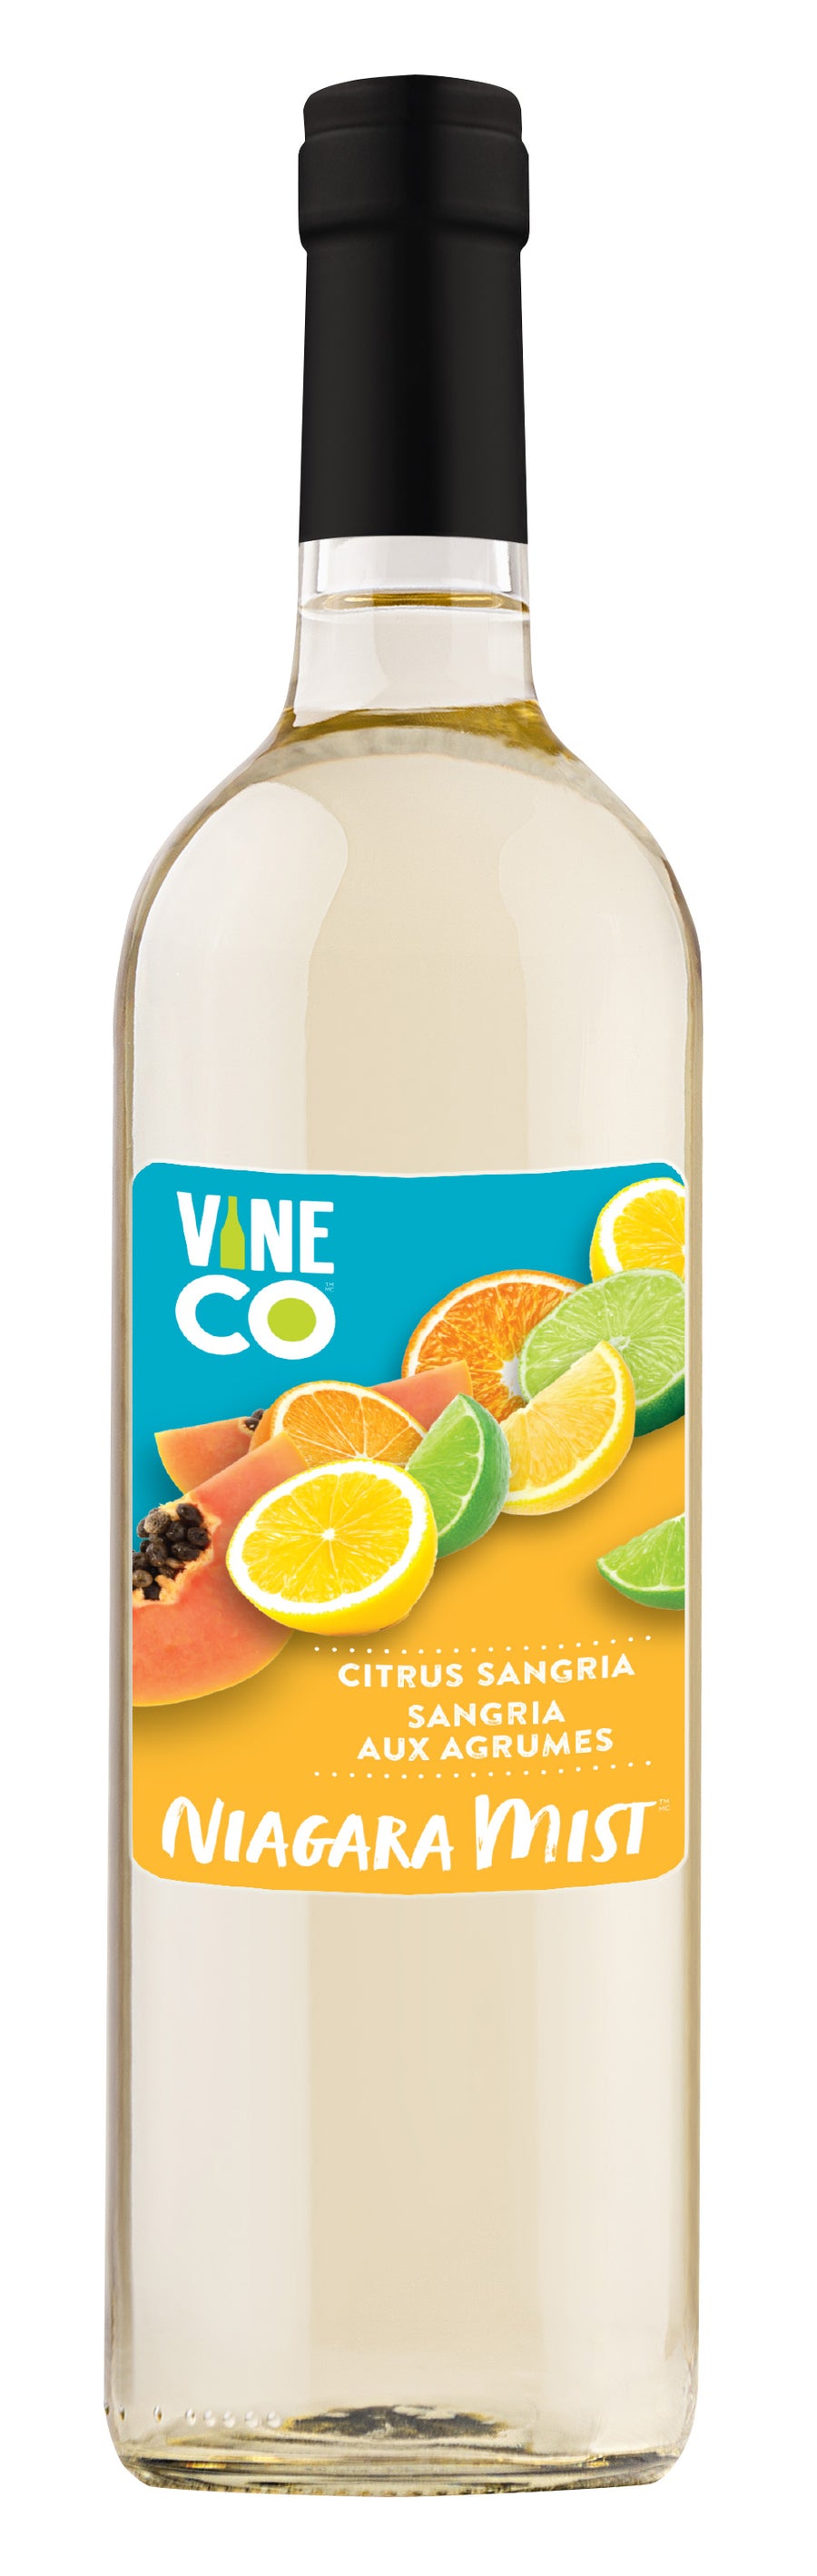 Labels - Citrus Sangria - VineCo Niagara Mist - The Wine Warehouse CA